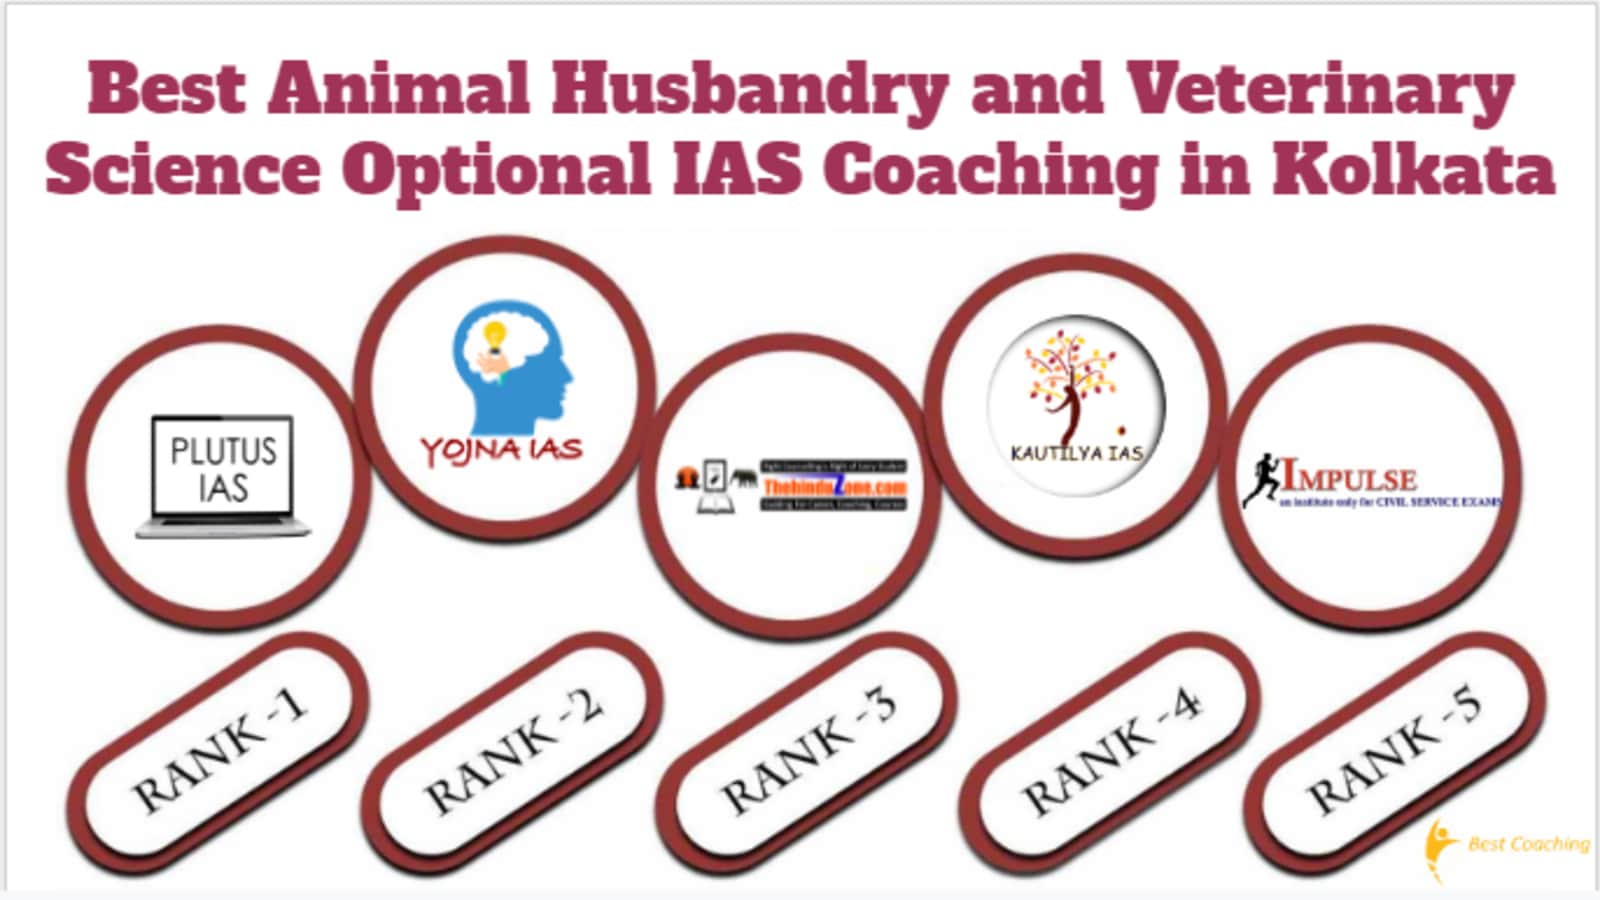 Best Animal Husbandry and Veterinary Science Optional IAS Coaching in Kolkata